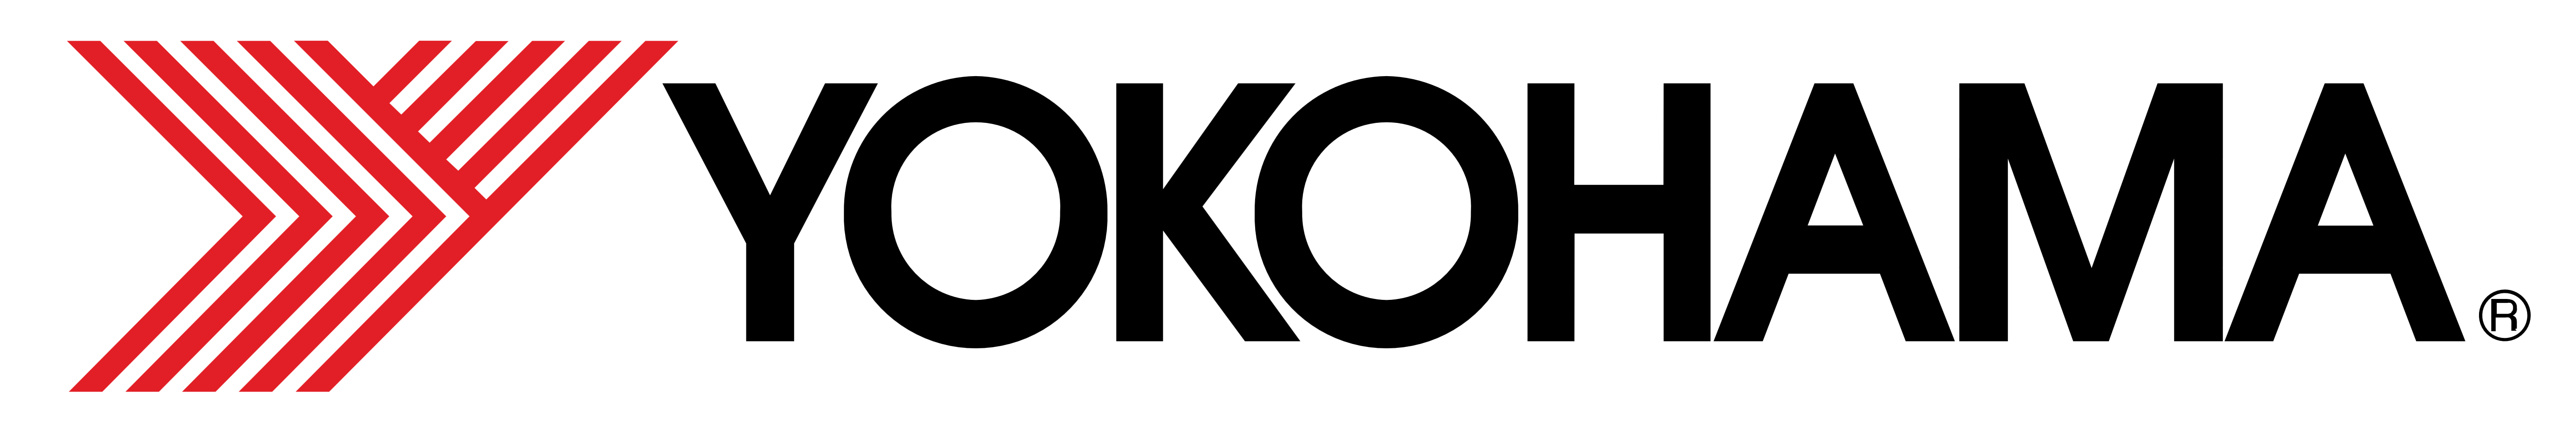 Yokohama logo, logotype